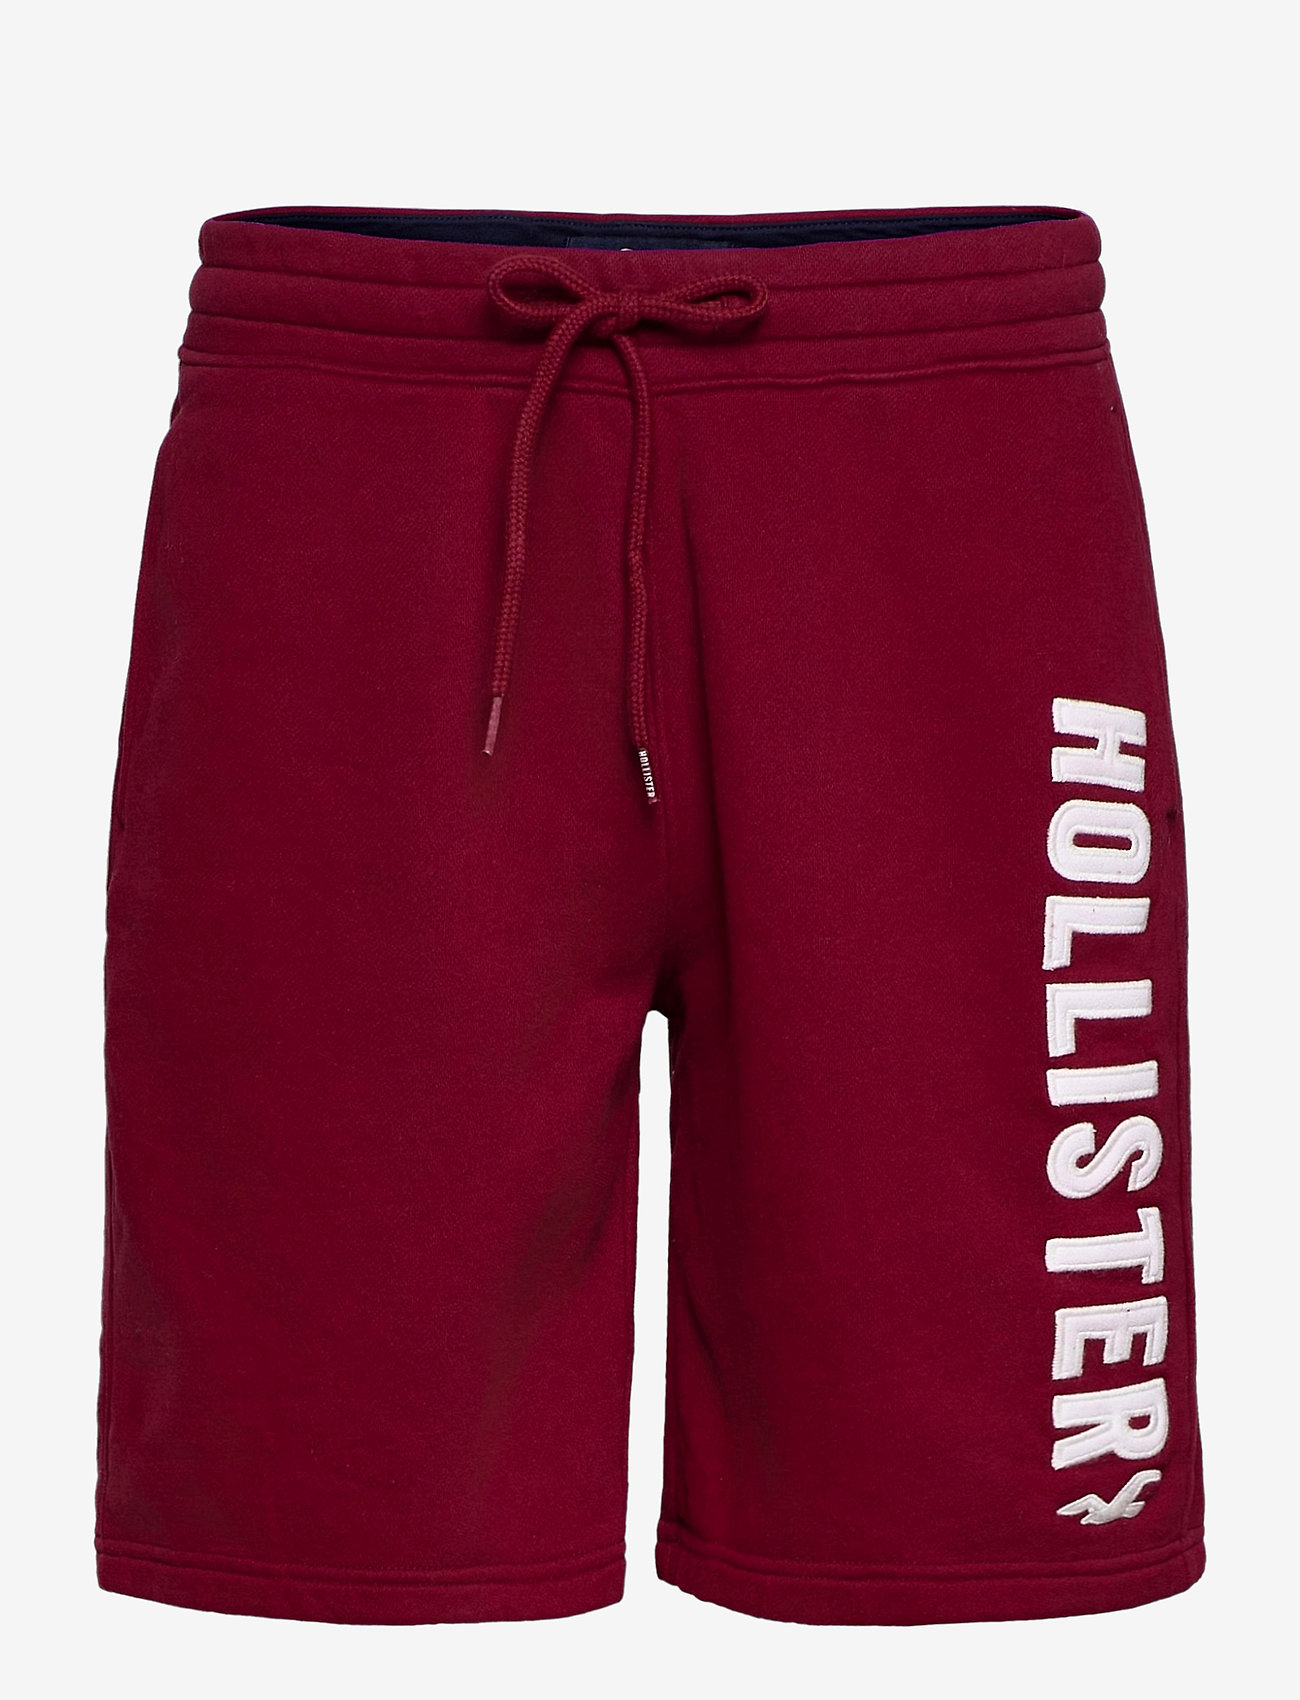 hollister logo shorts